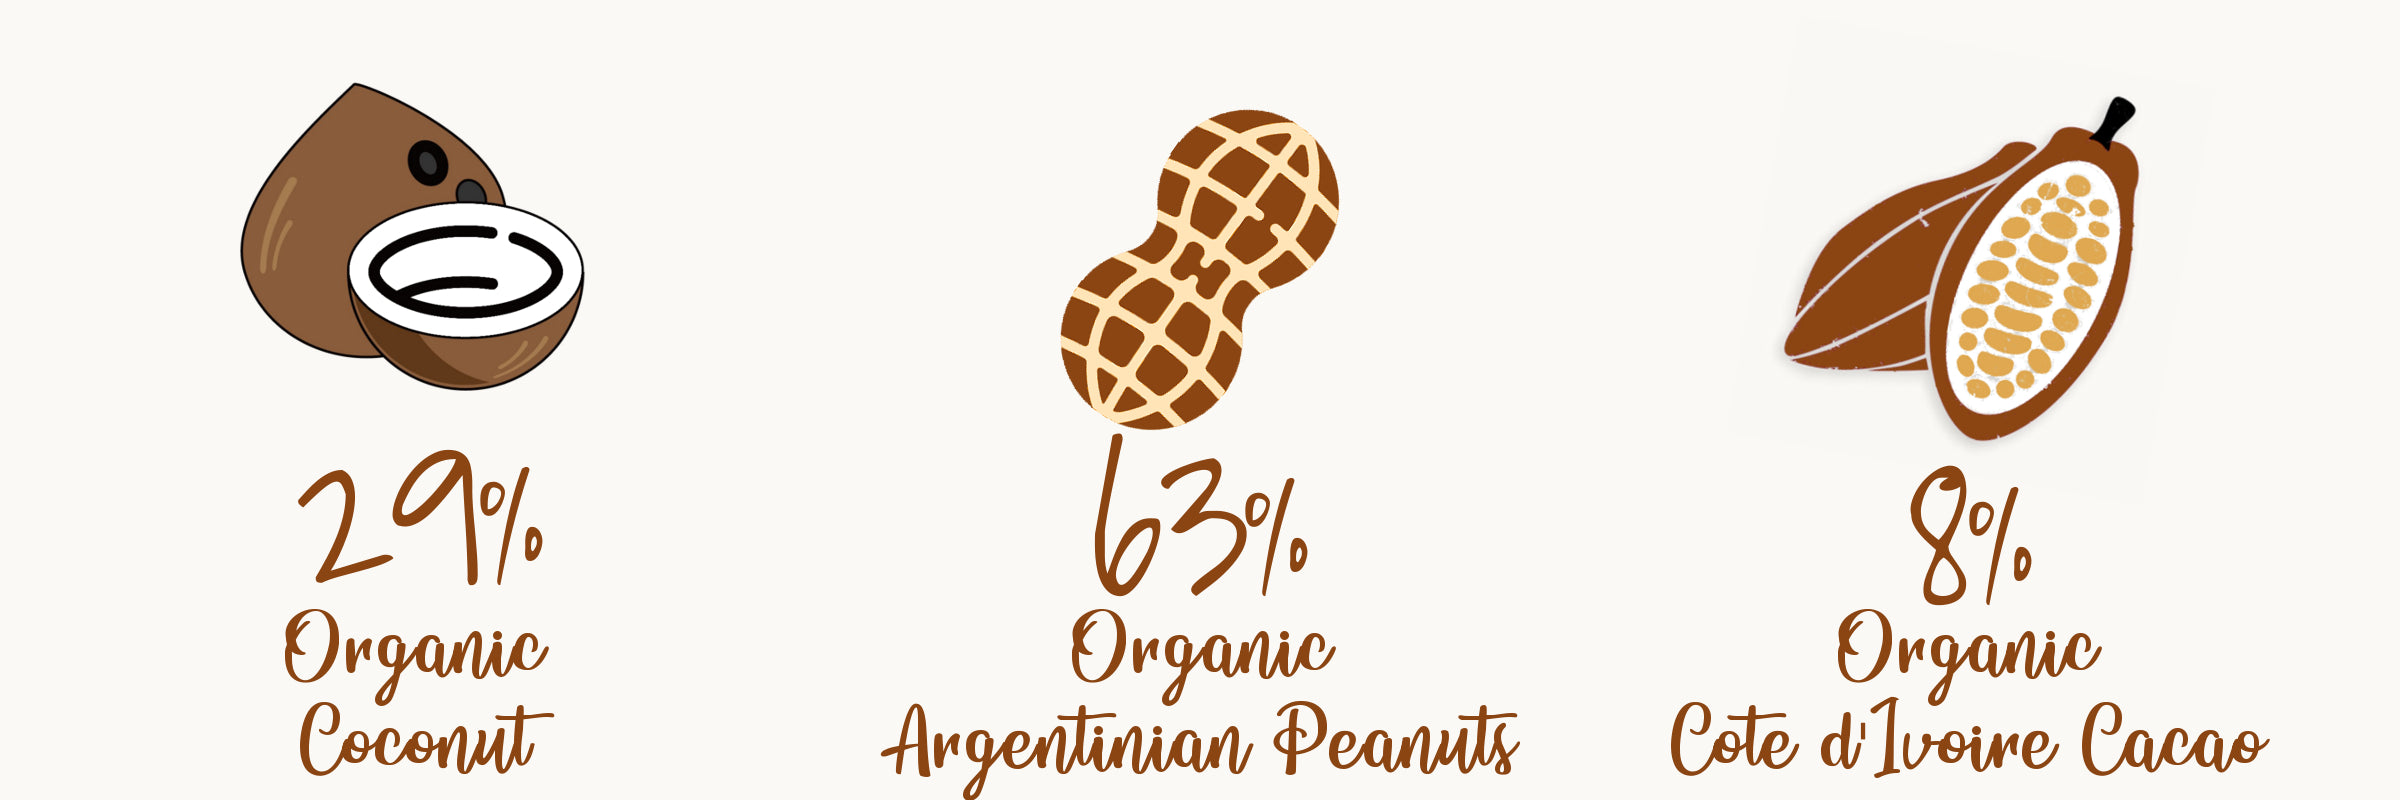 Nuttier Organic Raw Cacao Coconut Peanut Butter